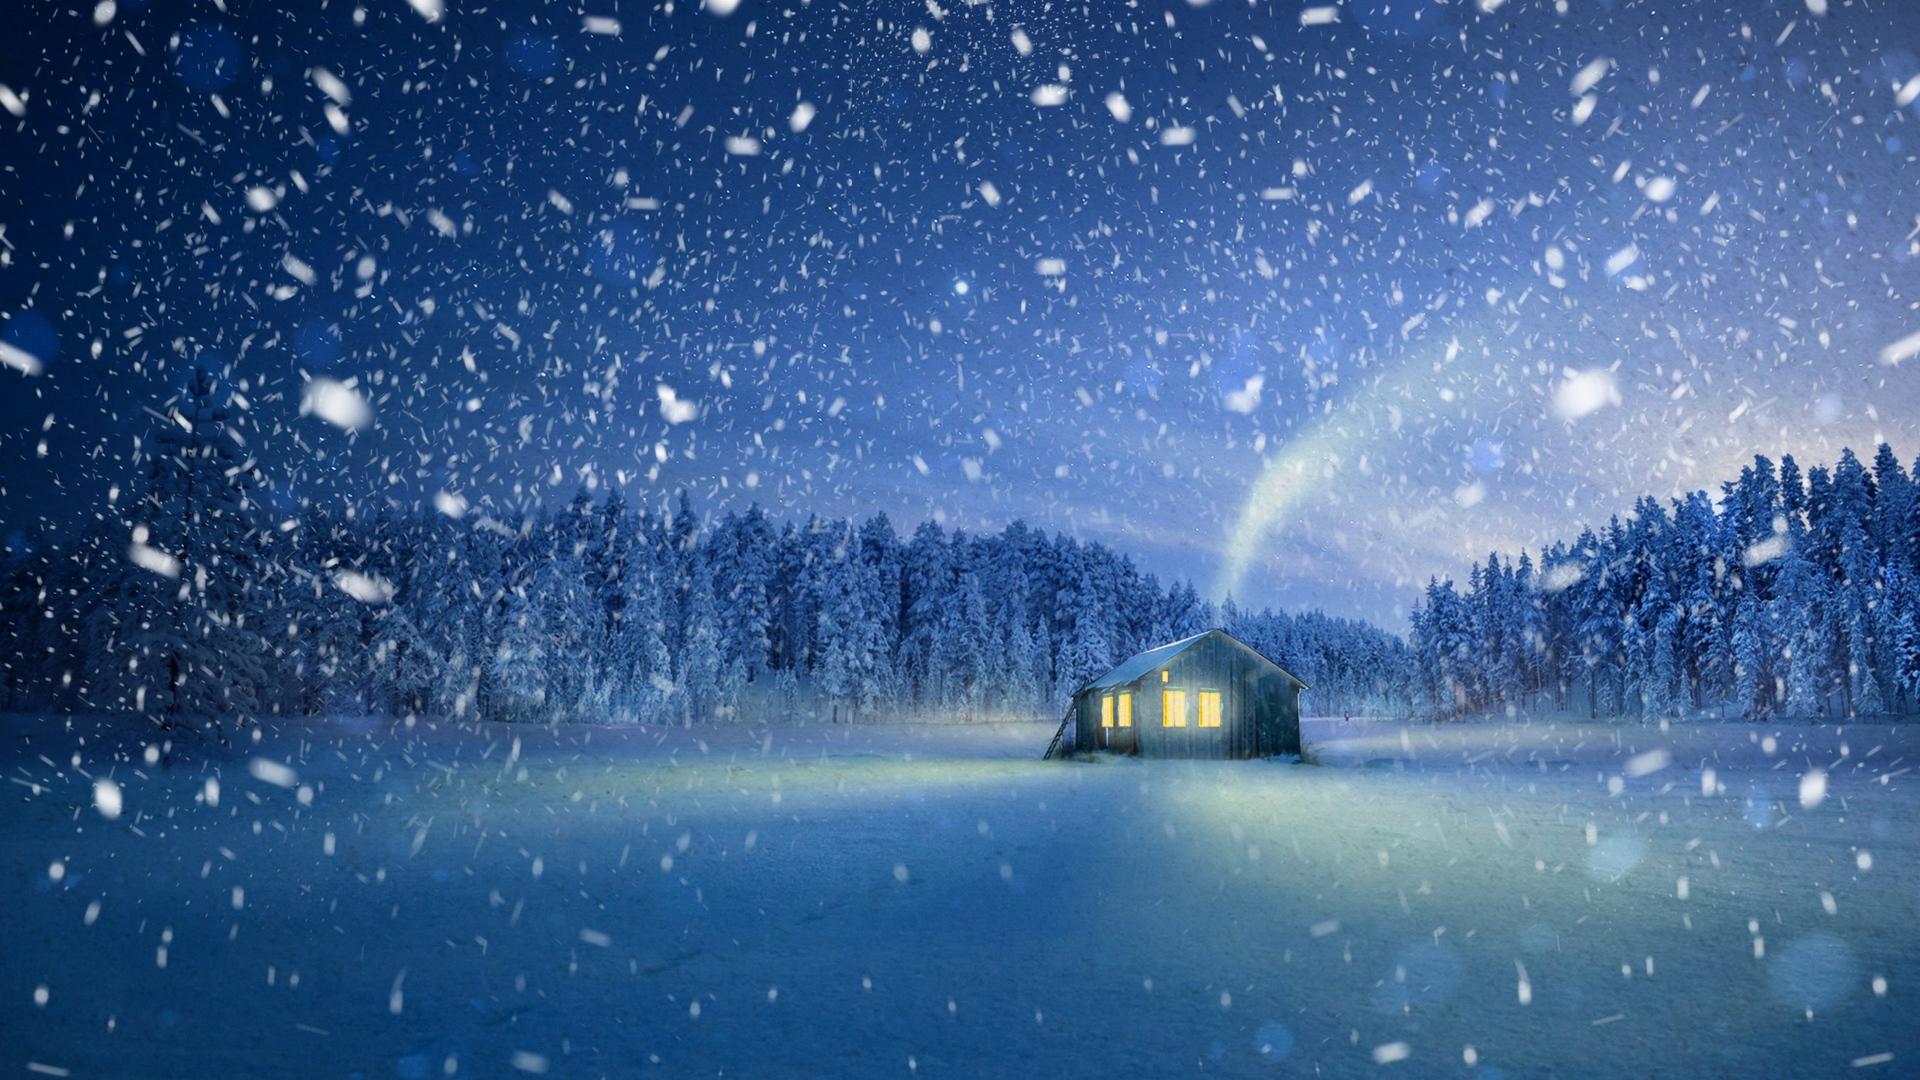 Download wallpaper 1920x1080 house, snowfall, snow, fabulous